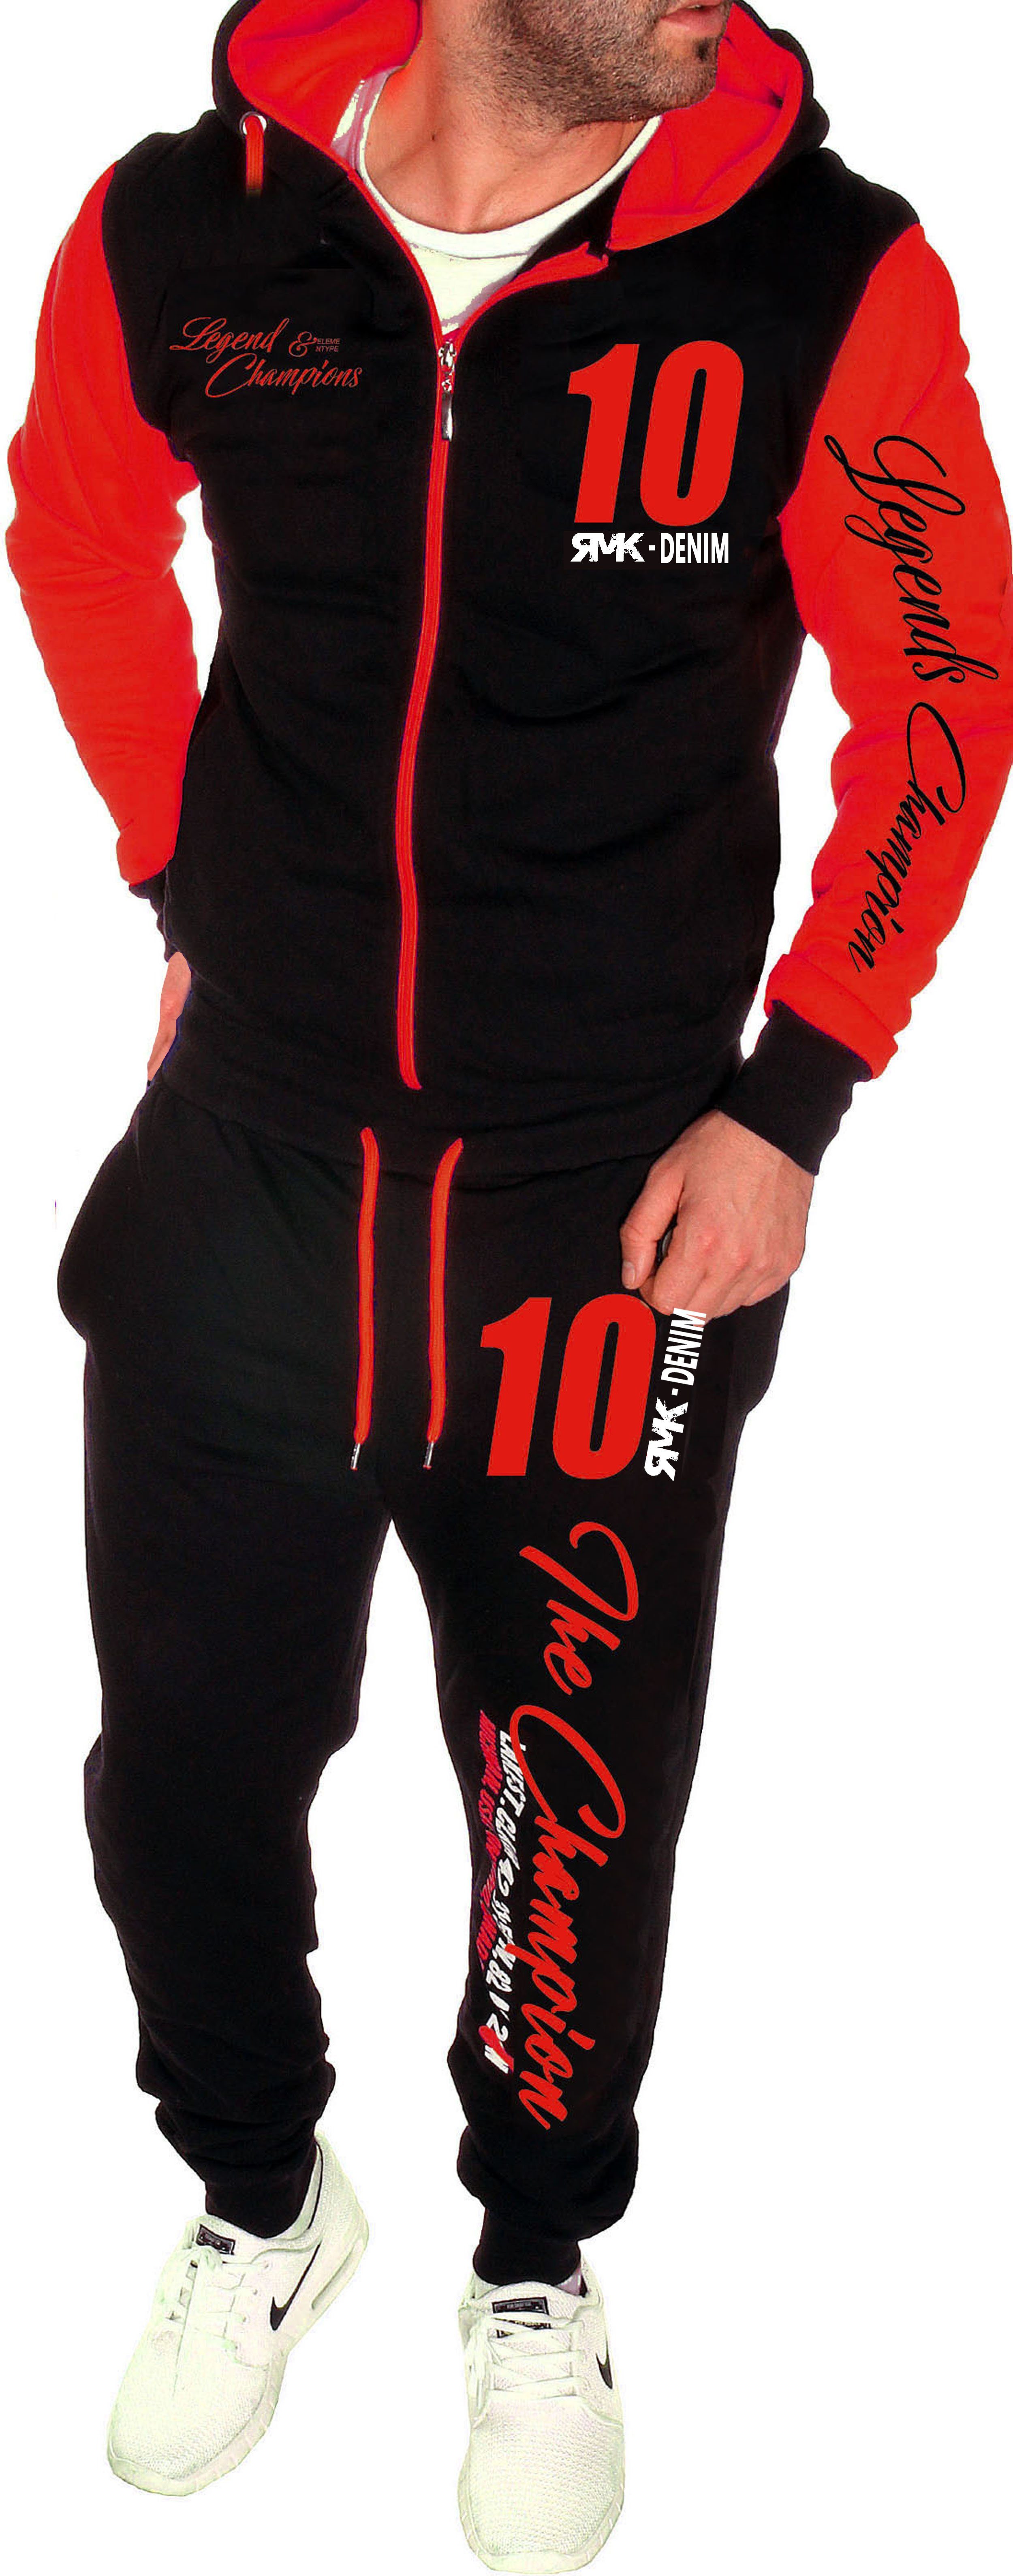 RMK Jogginganzug Herren Trainingsanzug Sportanzug Streetwear Fitness Jacke mit Kapuze Rot